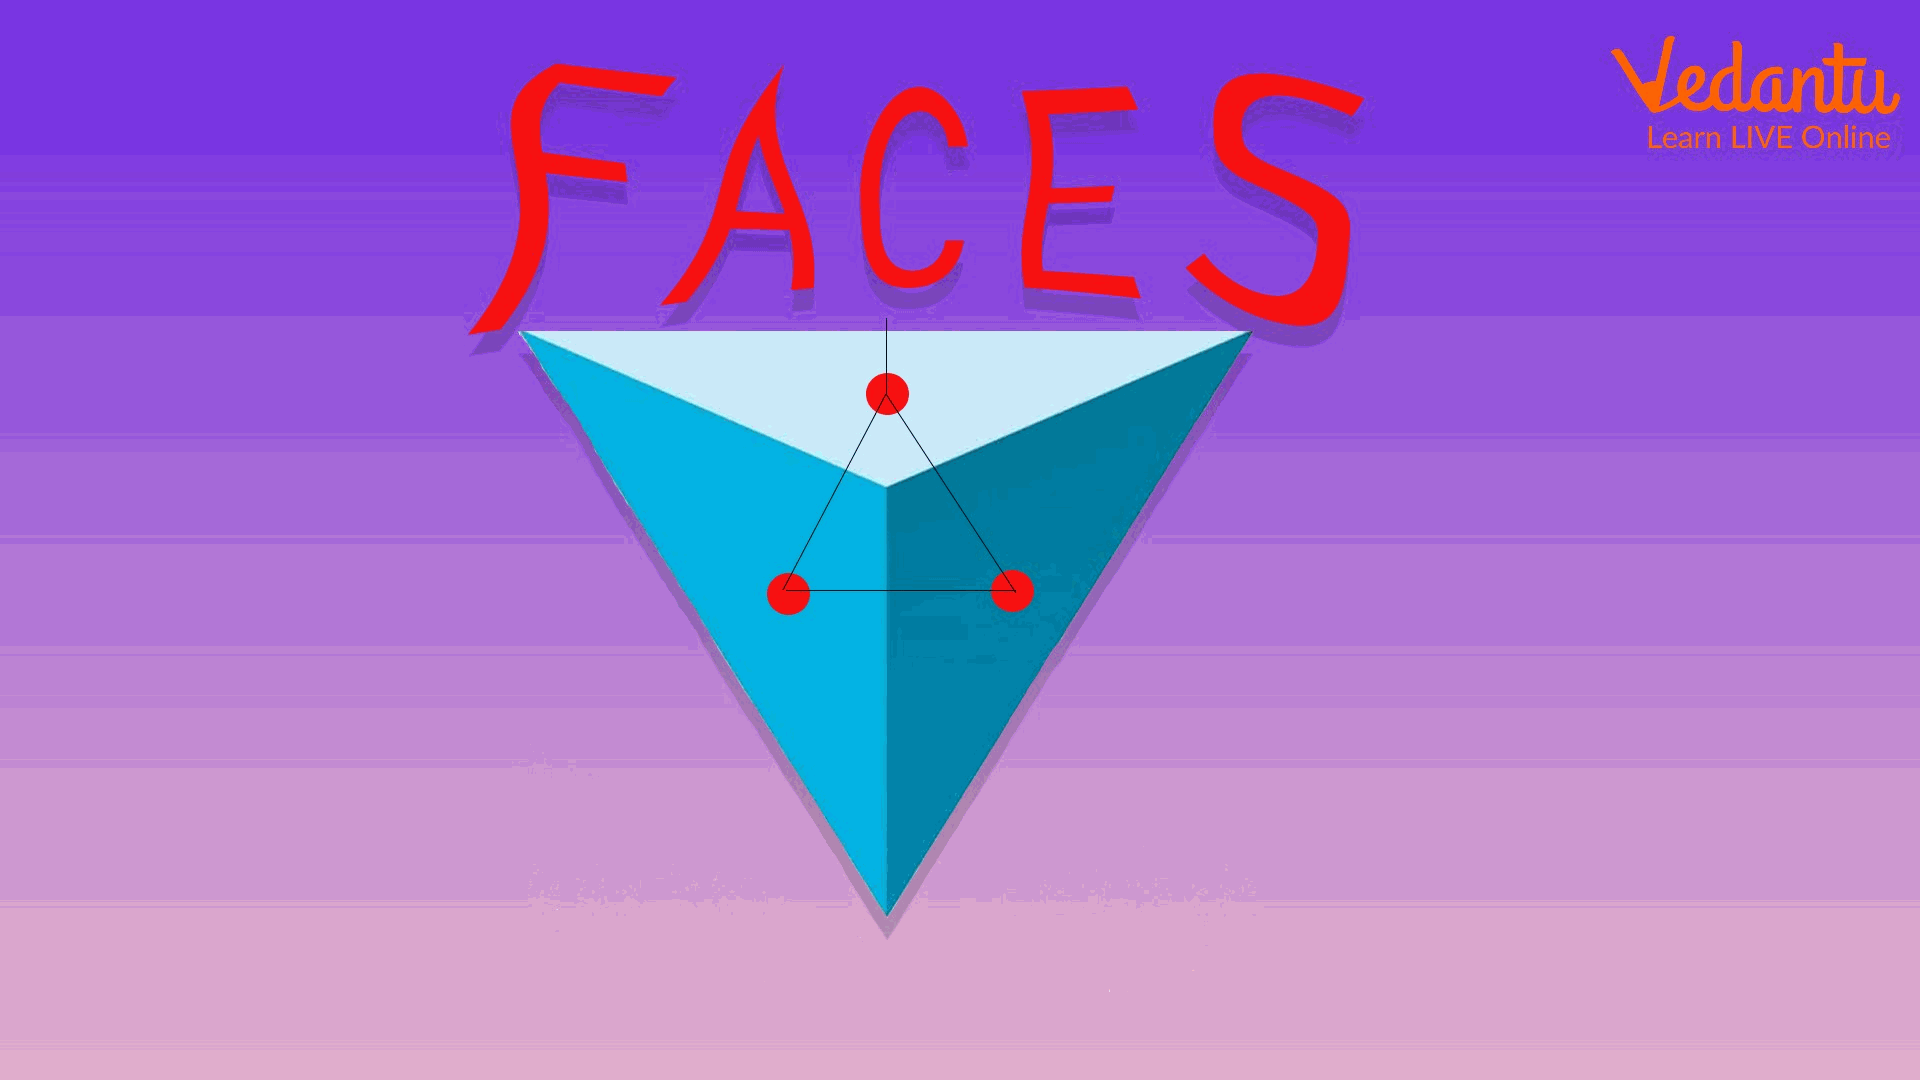 Faces of a Tetrahedron